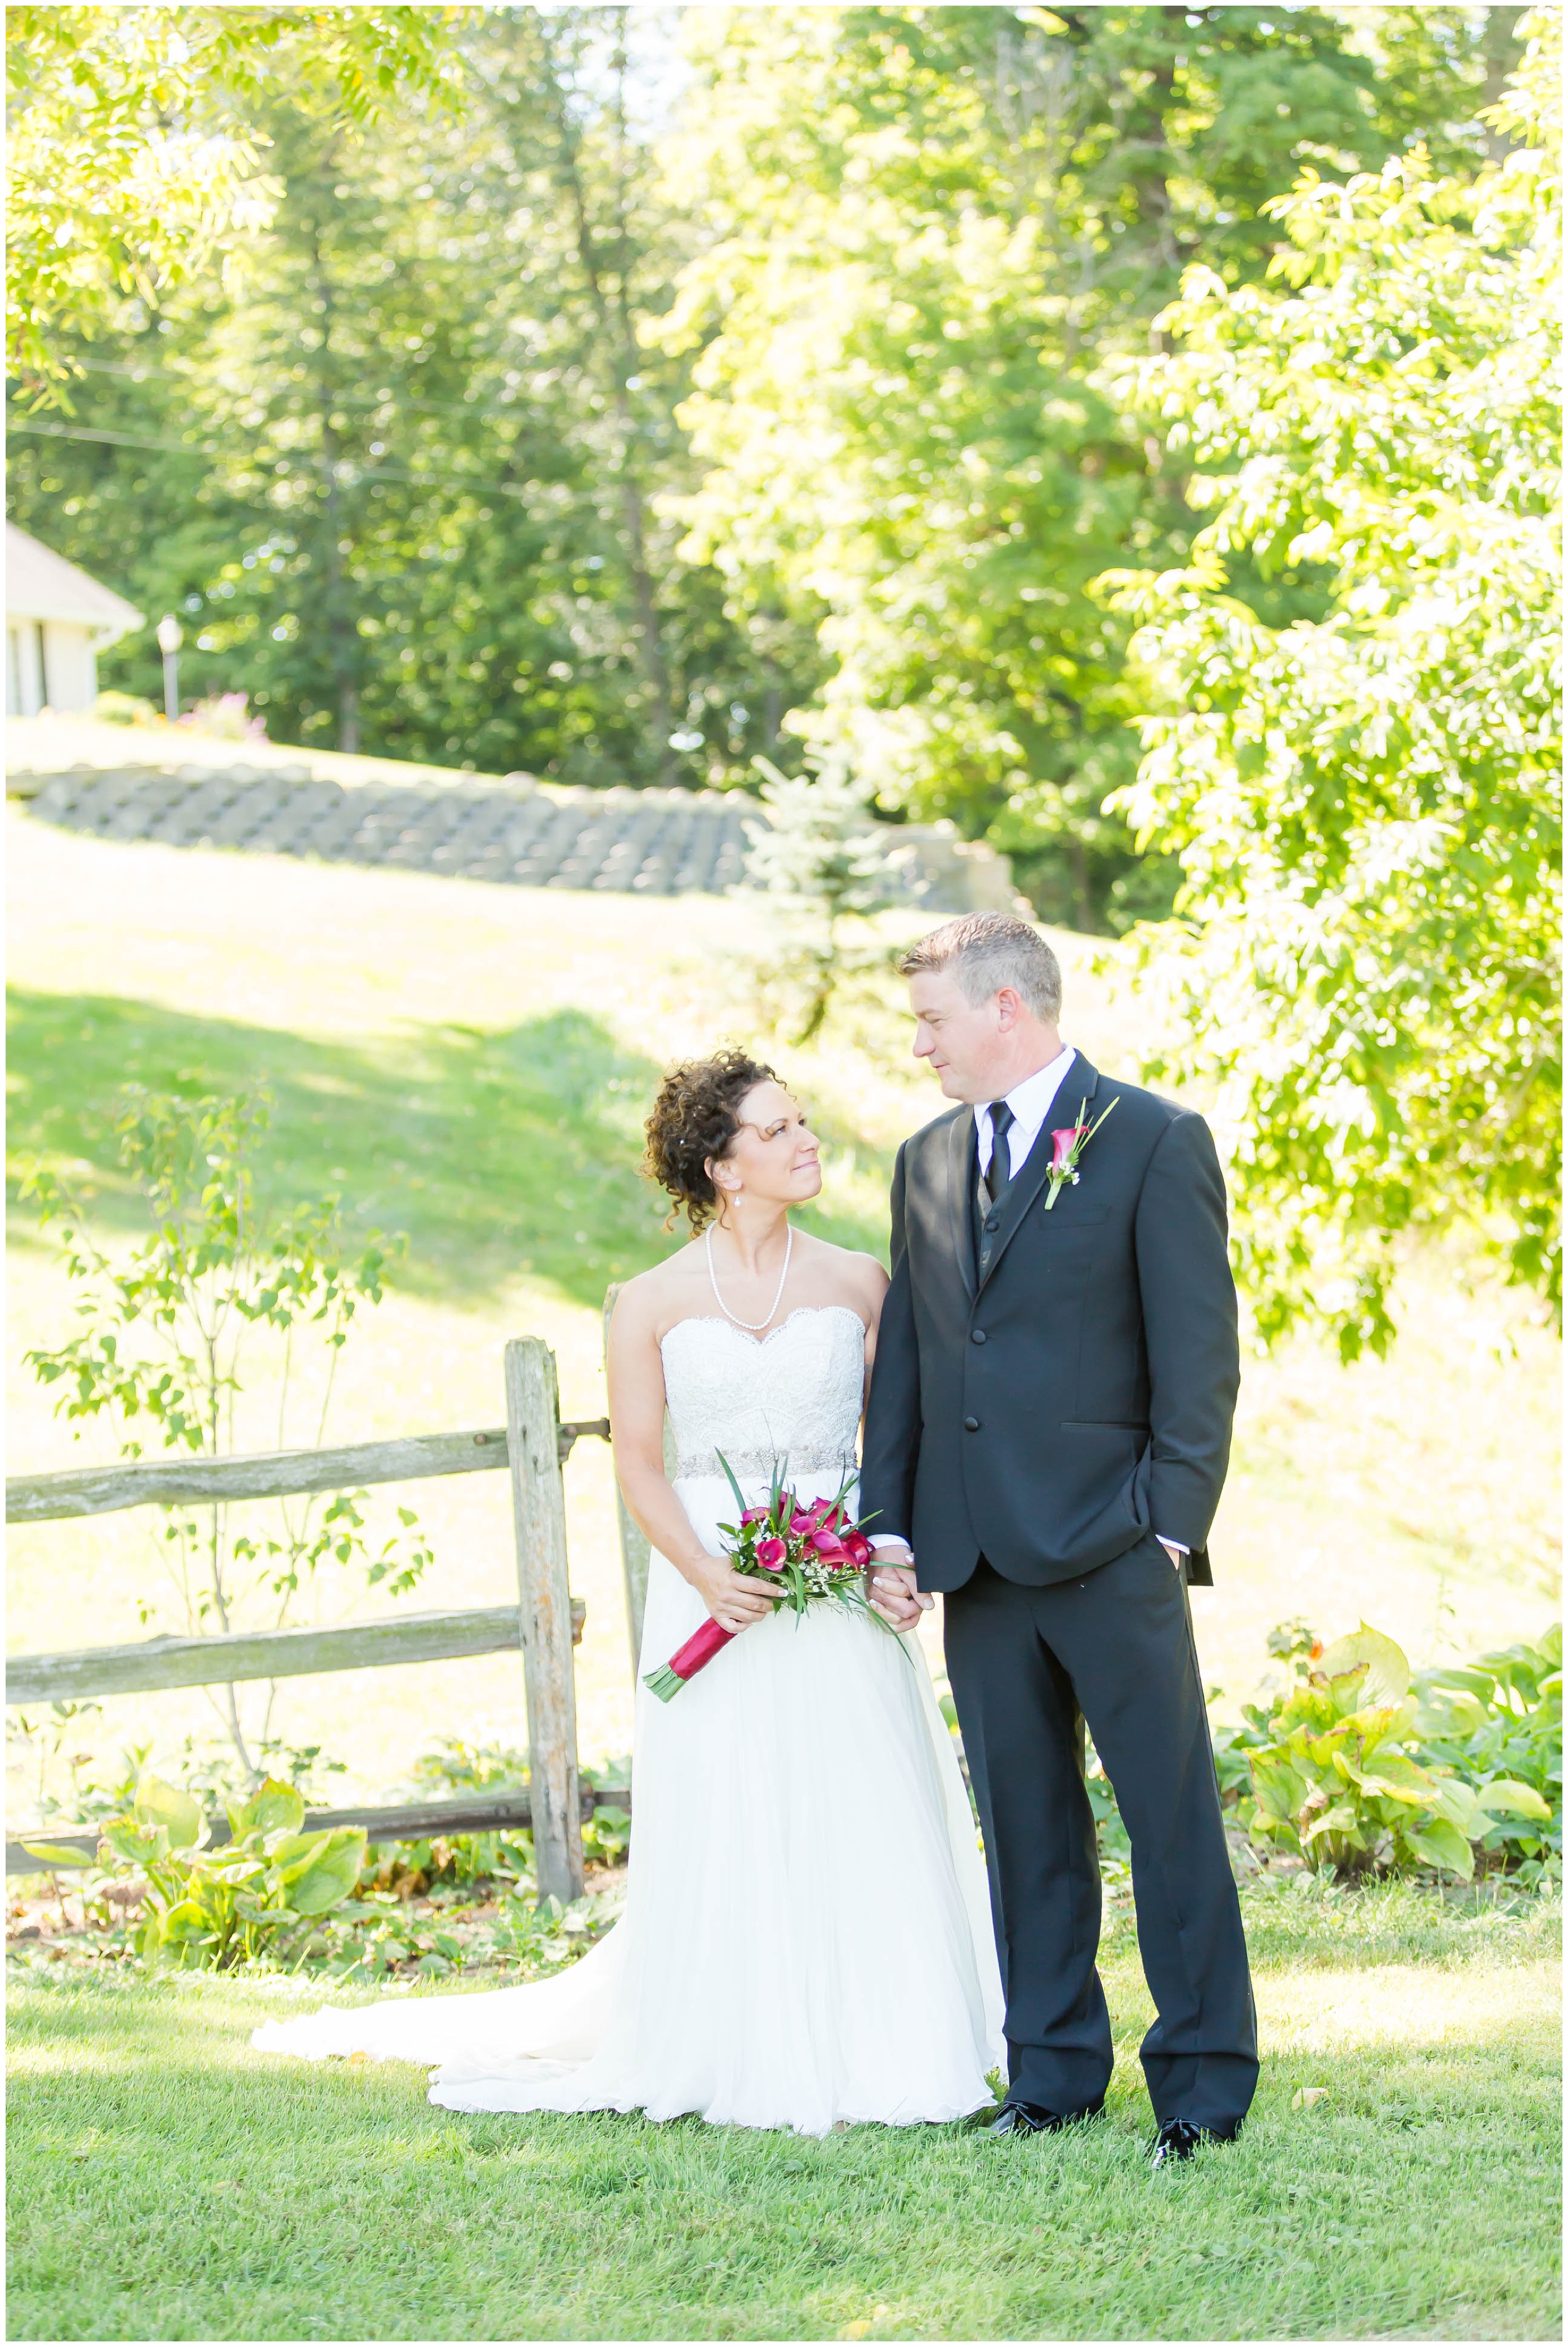 Miller Manor,Sugarcreek Ohio Wedding,photographer akron ohio,